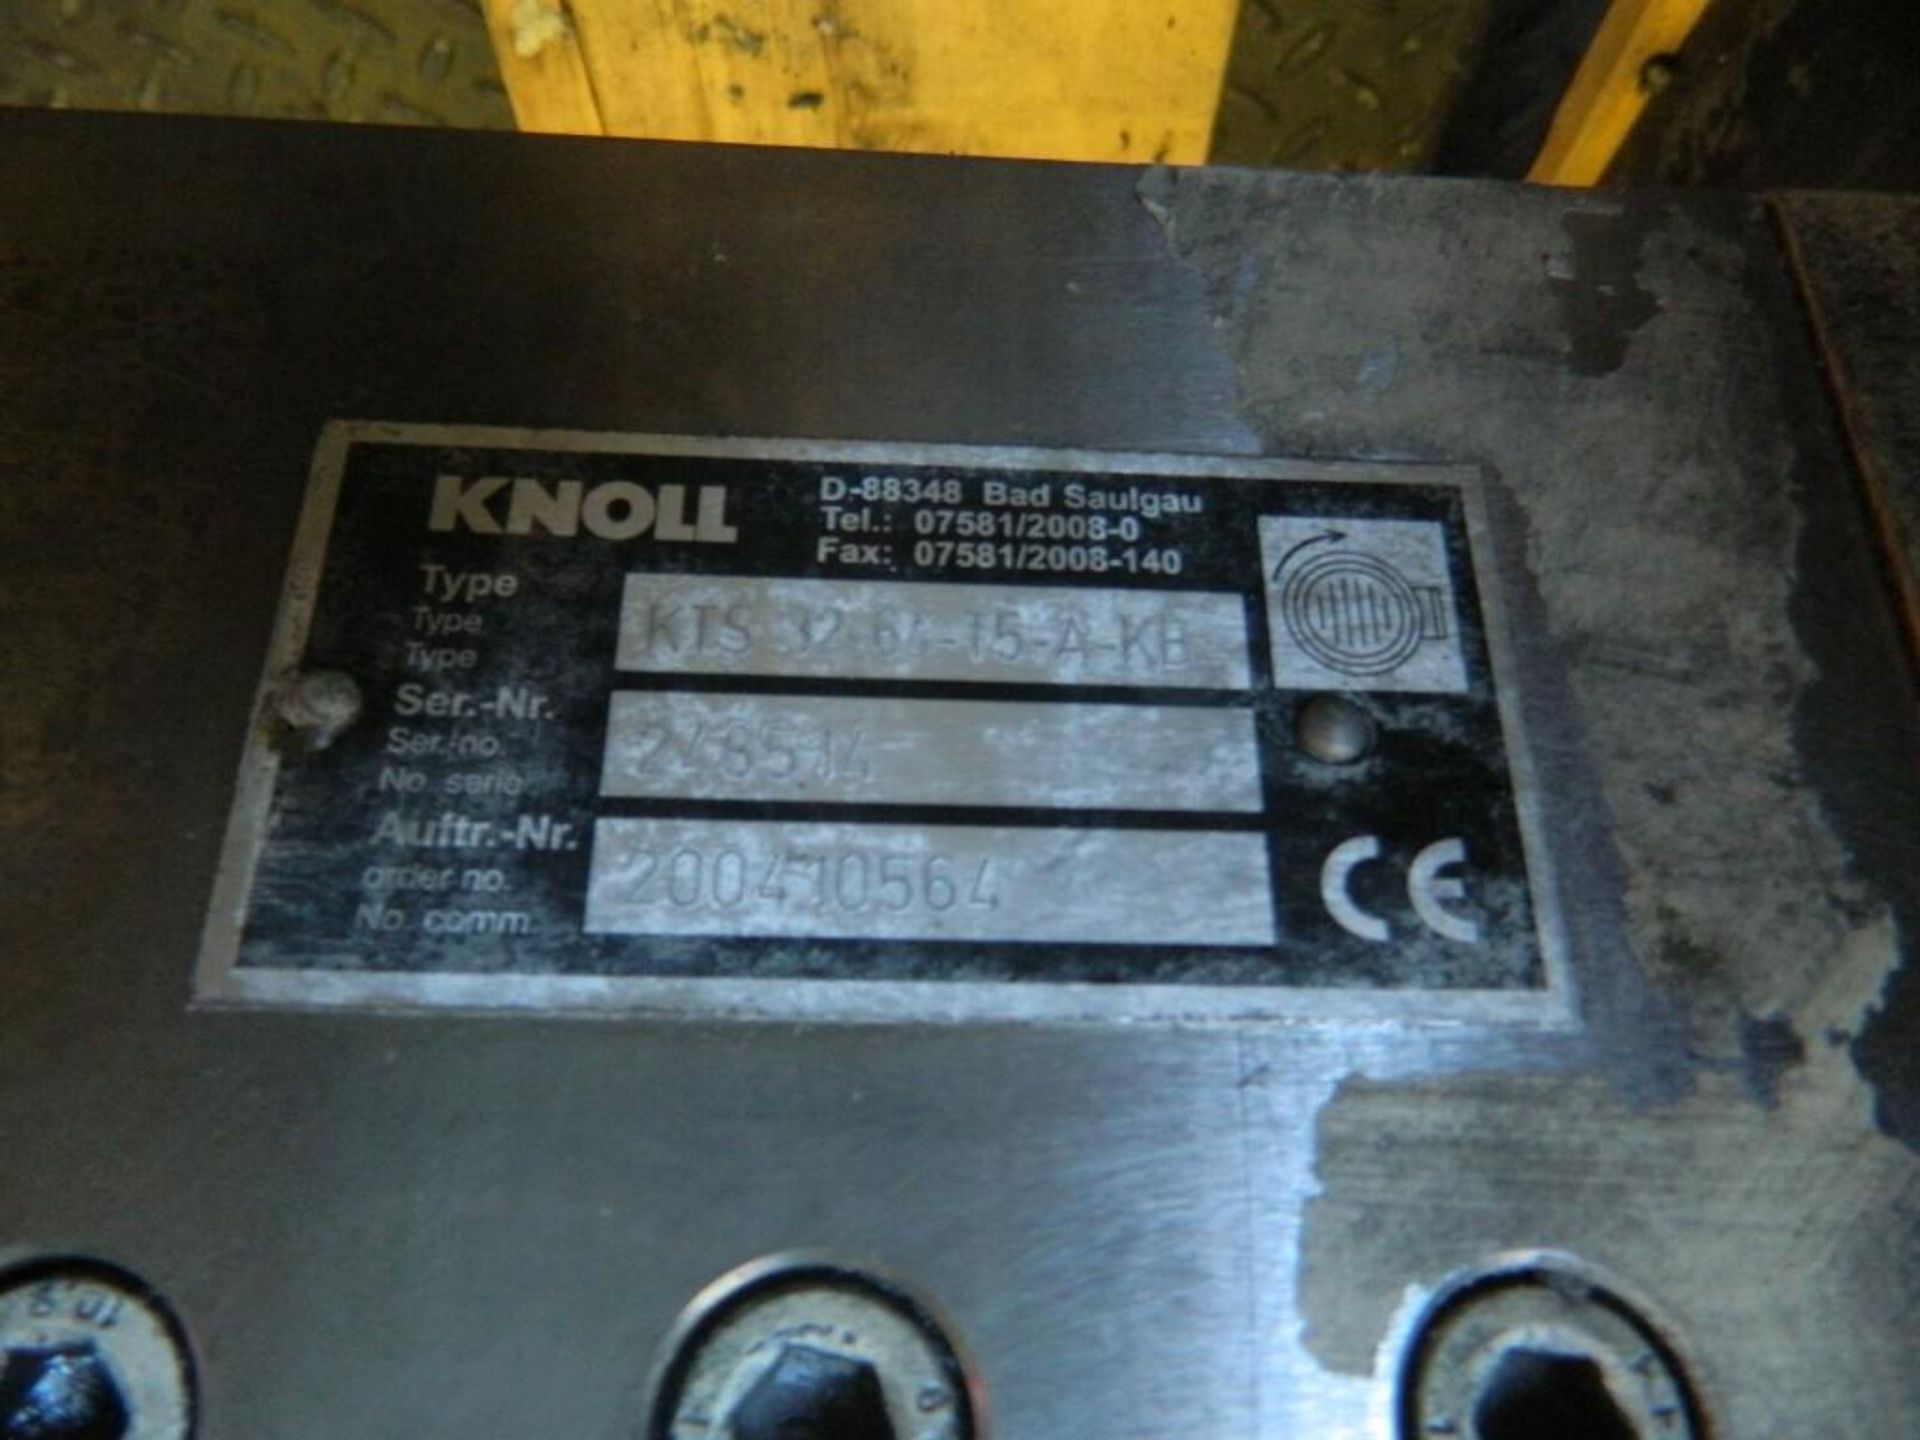 Knoll High Pressure Coolant Pump w/ 15HP Motor, # KTS32-64-T5-A-KB - Image 14 of 22